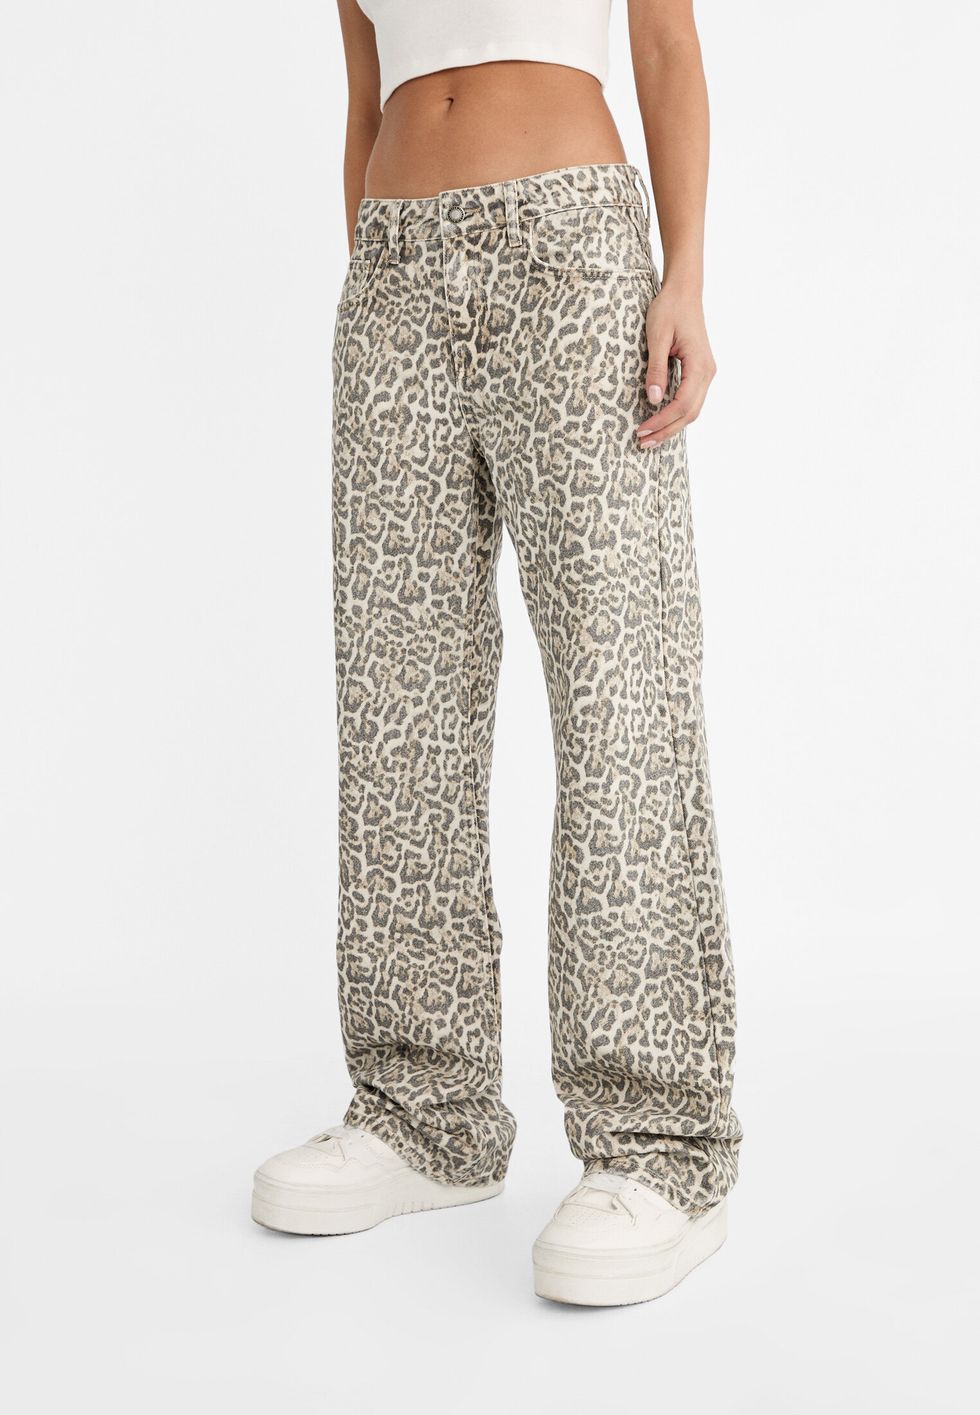 pantalones de leopardo de stradivarius para todas las tallas